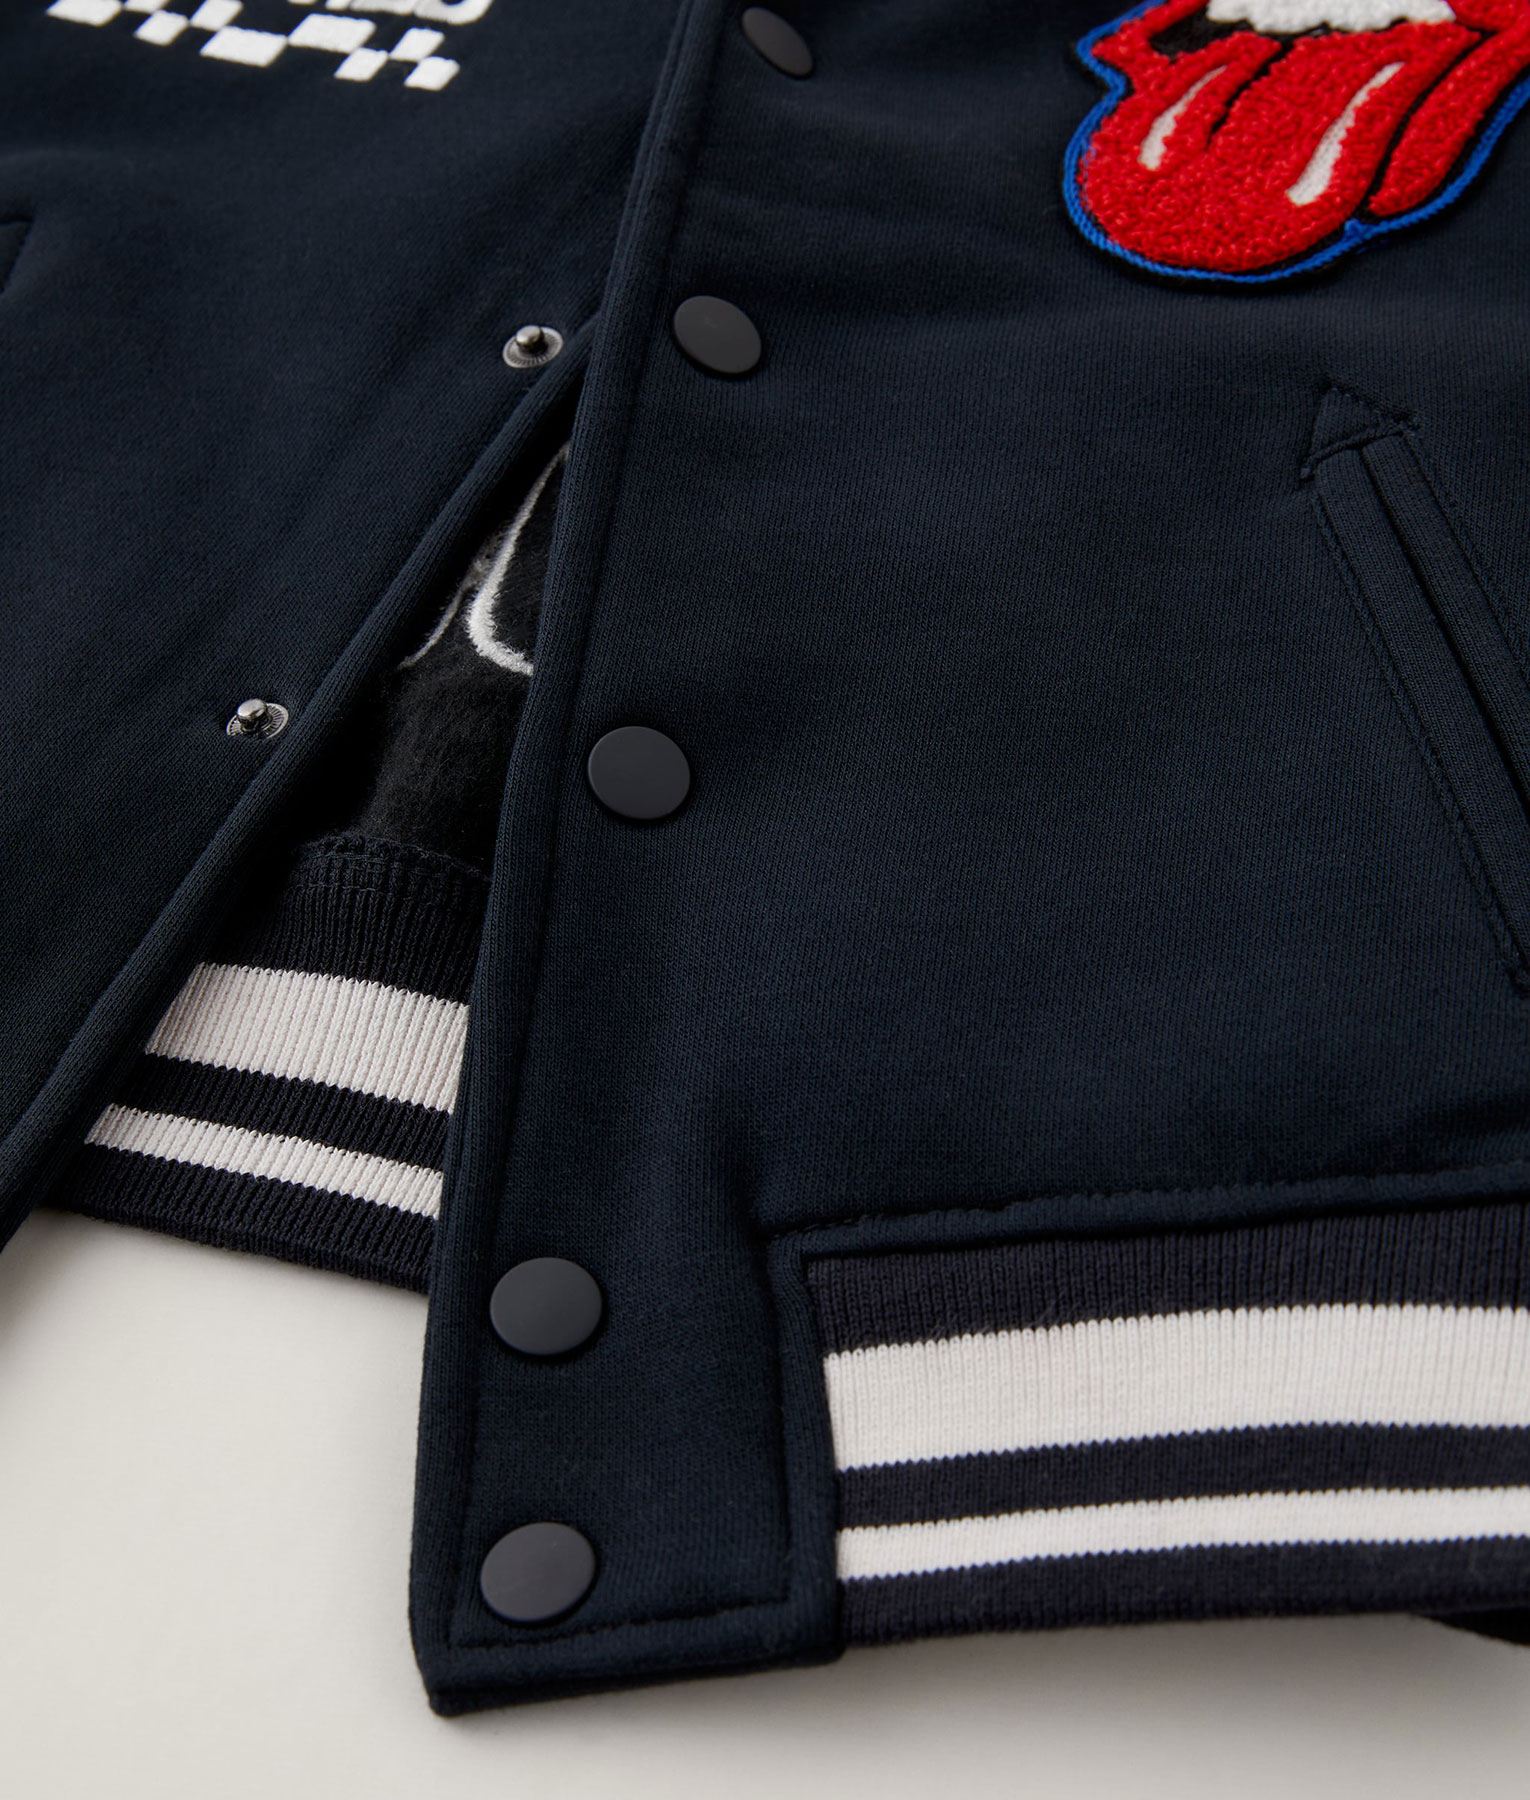 Rolling Stones Black Varsity Jacket (4)